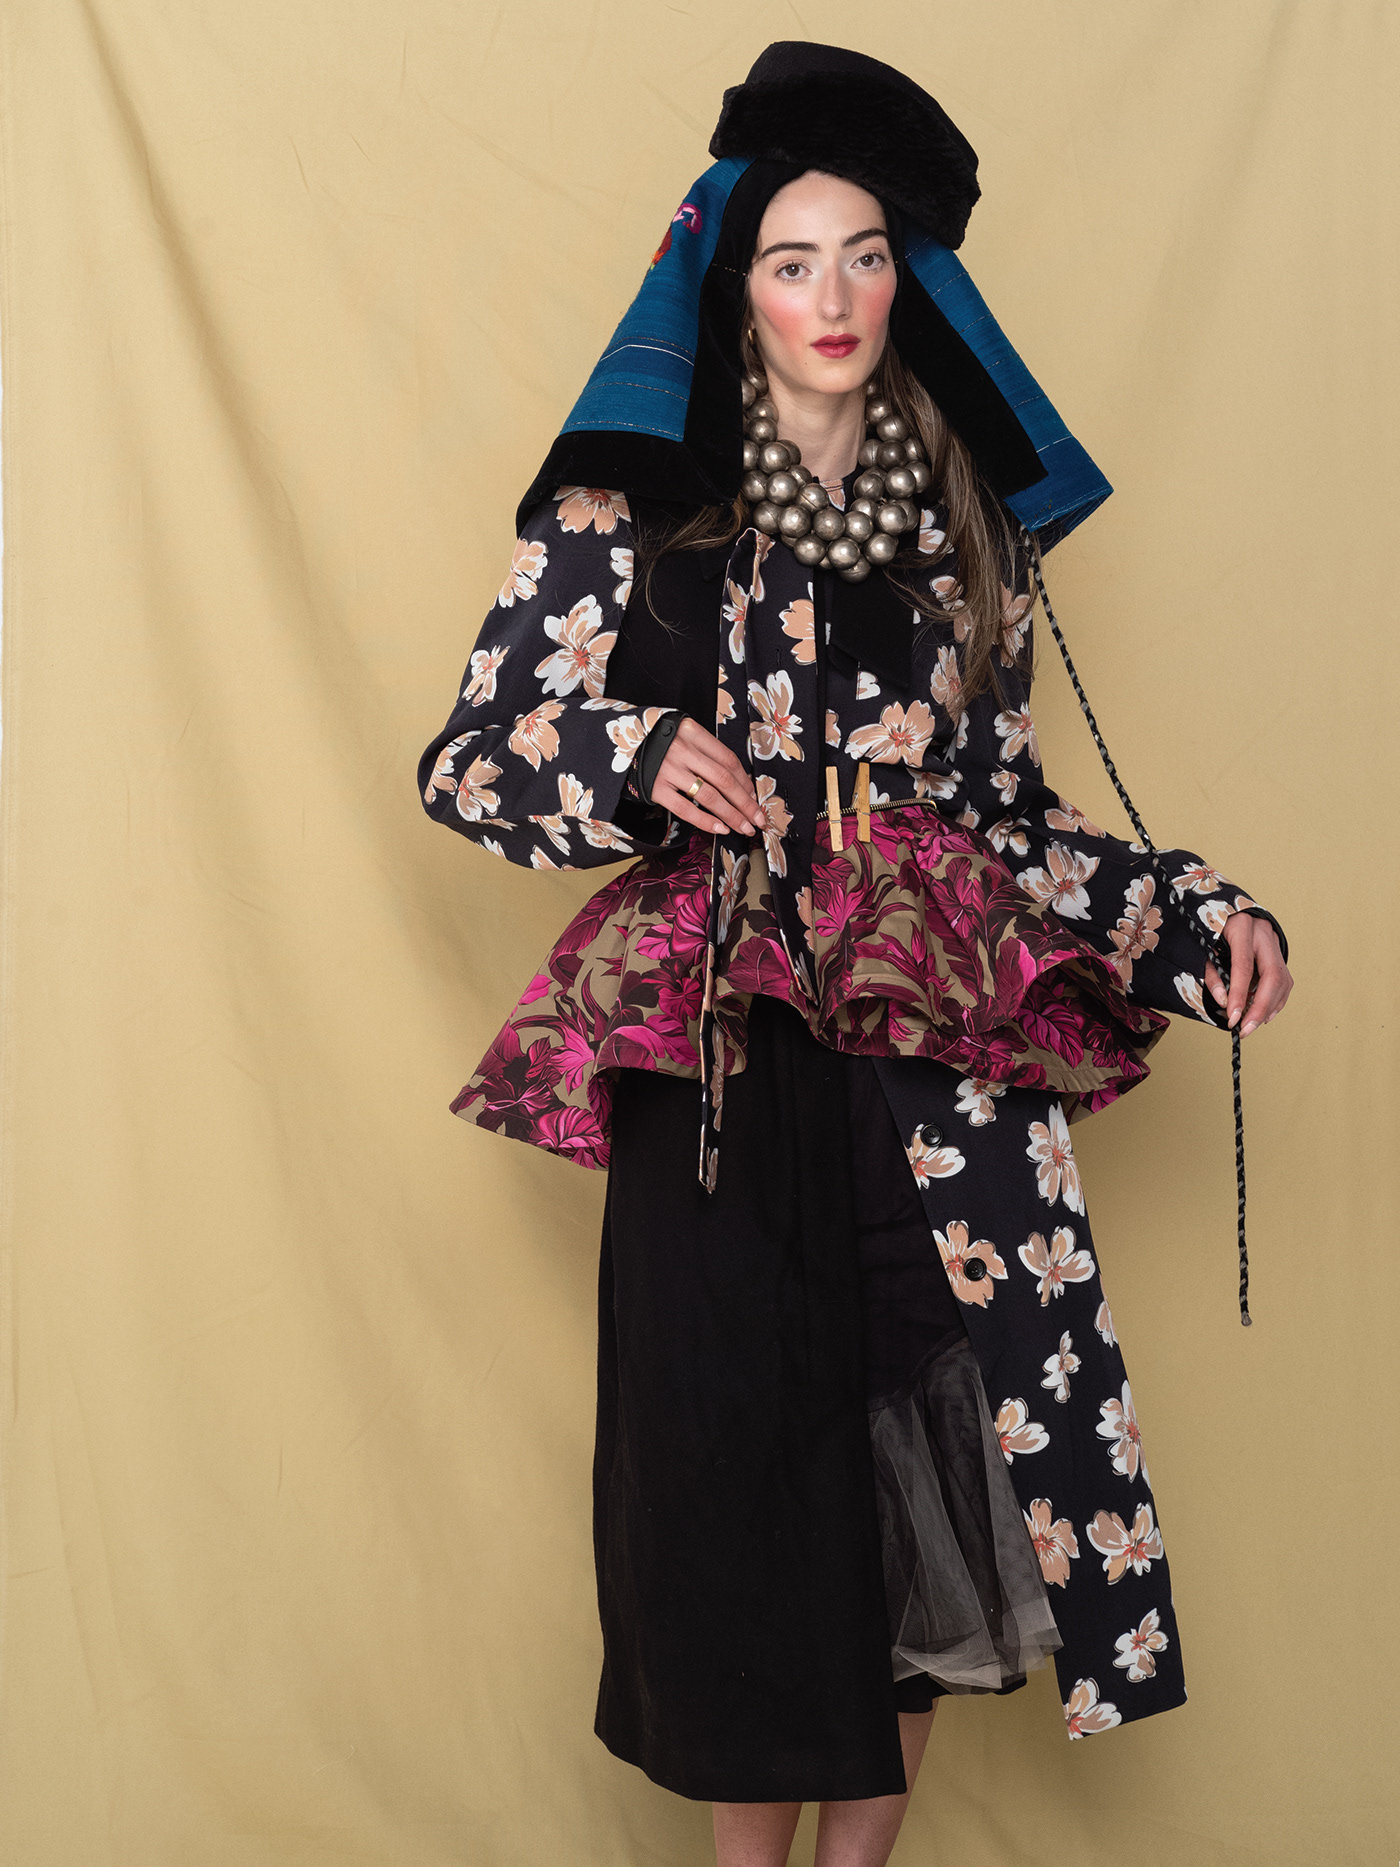 Ethno folk pattern textile fabric portrait beauty